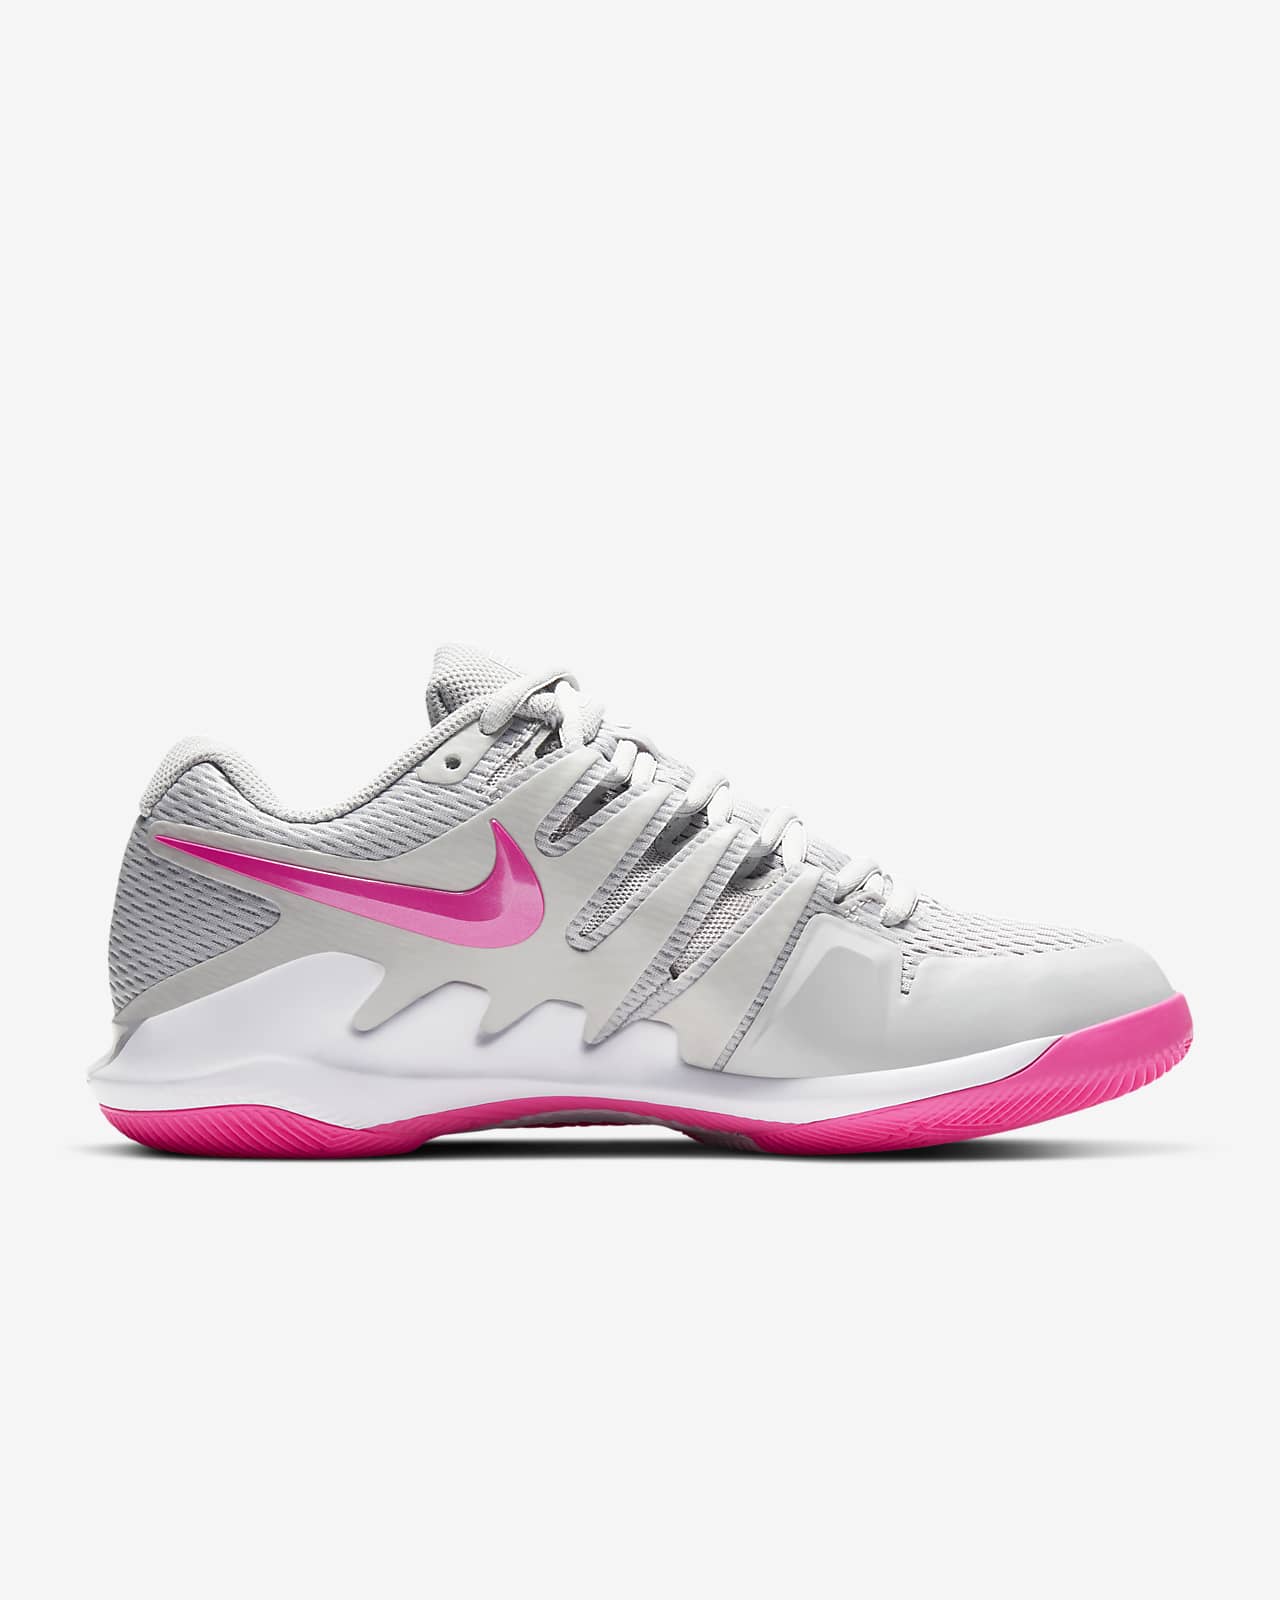 nikecourt air zoom vapor x women's hard court tennis shoe